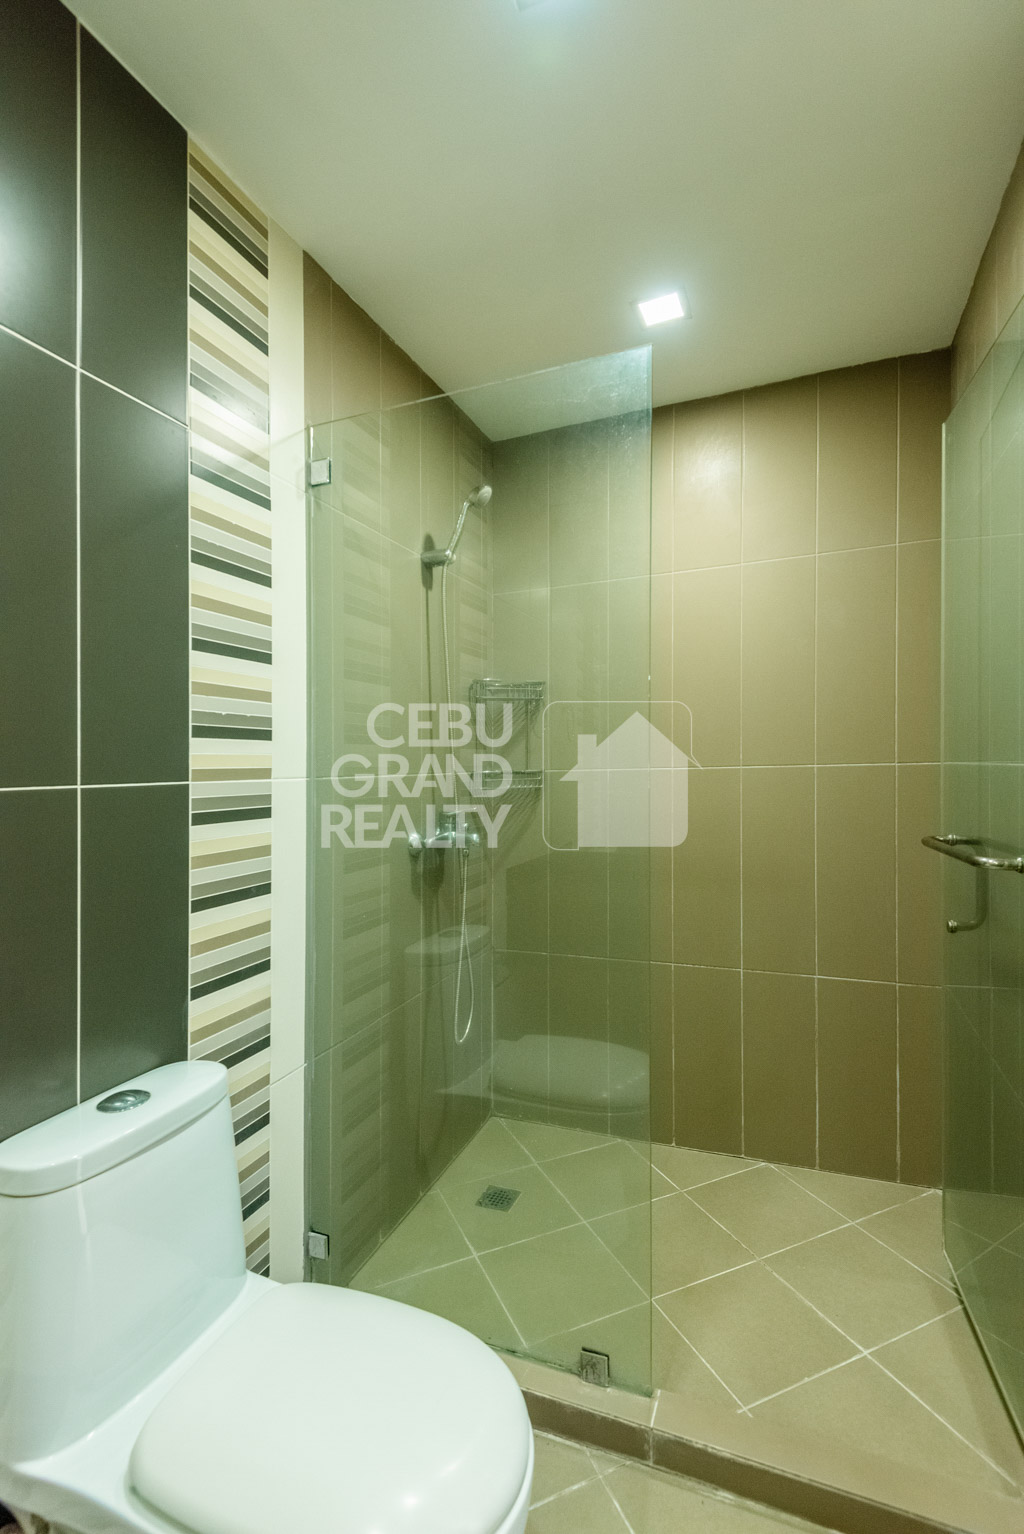 RCGS3 Furnished 2 Bedroom Condo for Rent in Banilad Cebu - 10